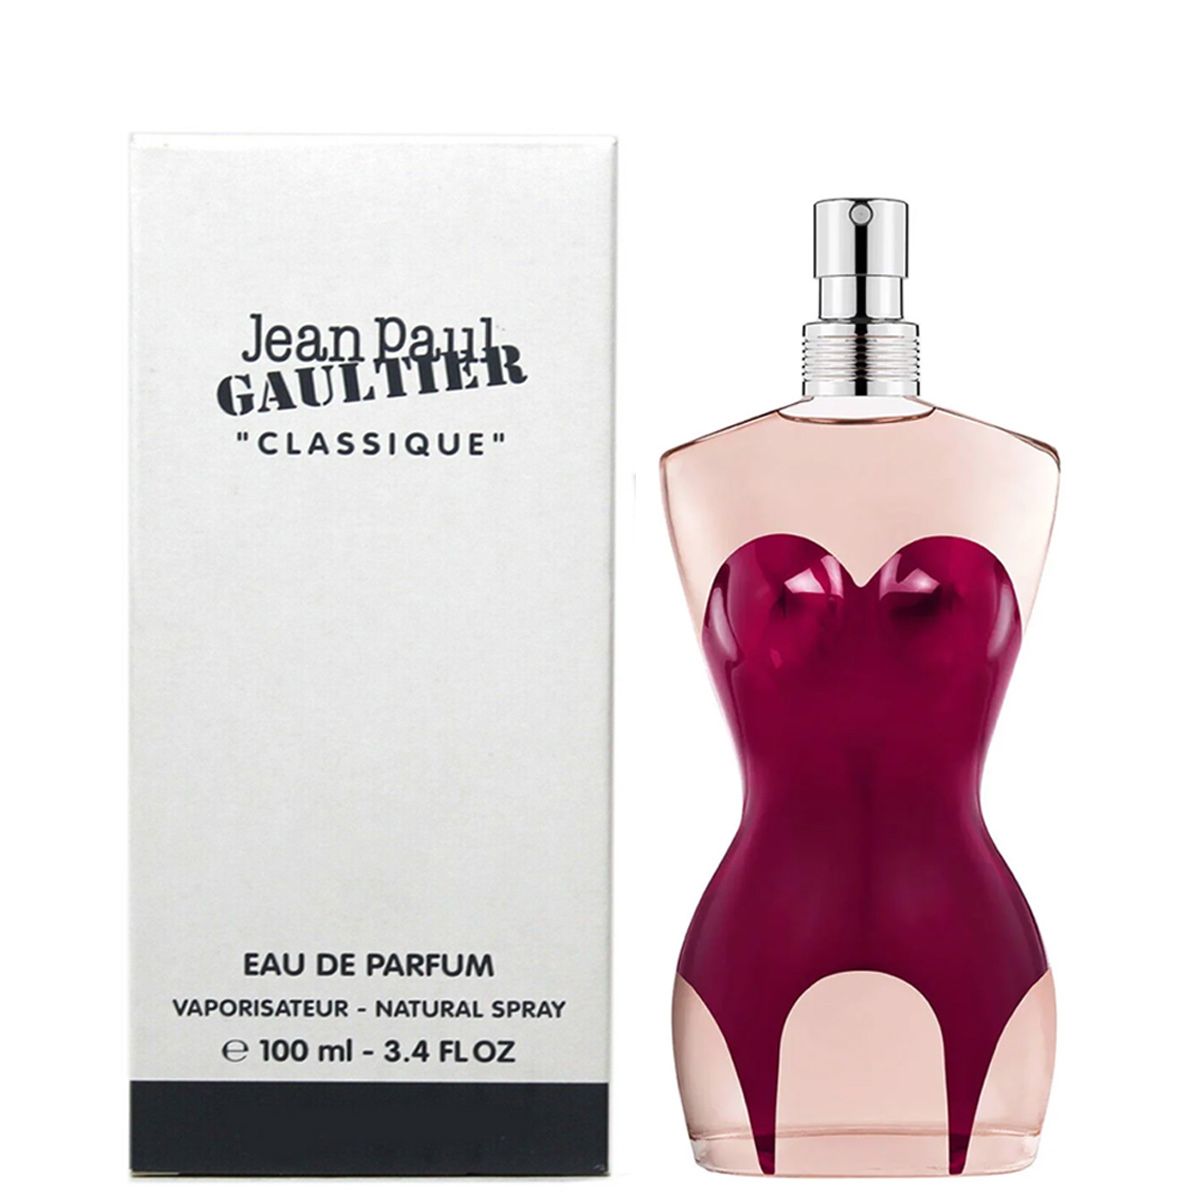  Jean Paul Gaultier Classique Eau De Parfum Collector 2017 